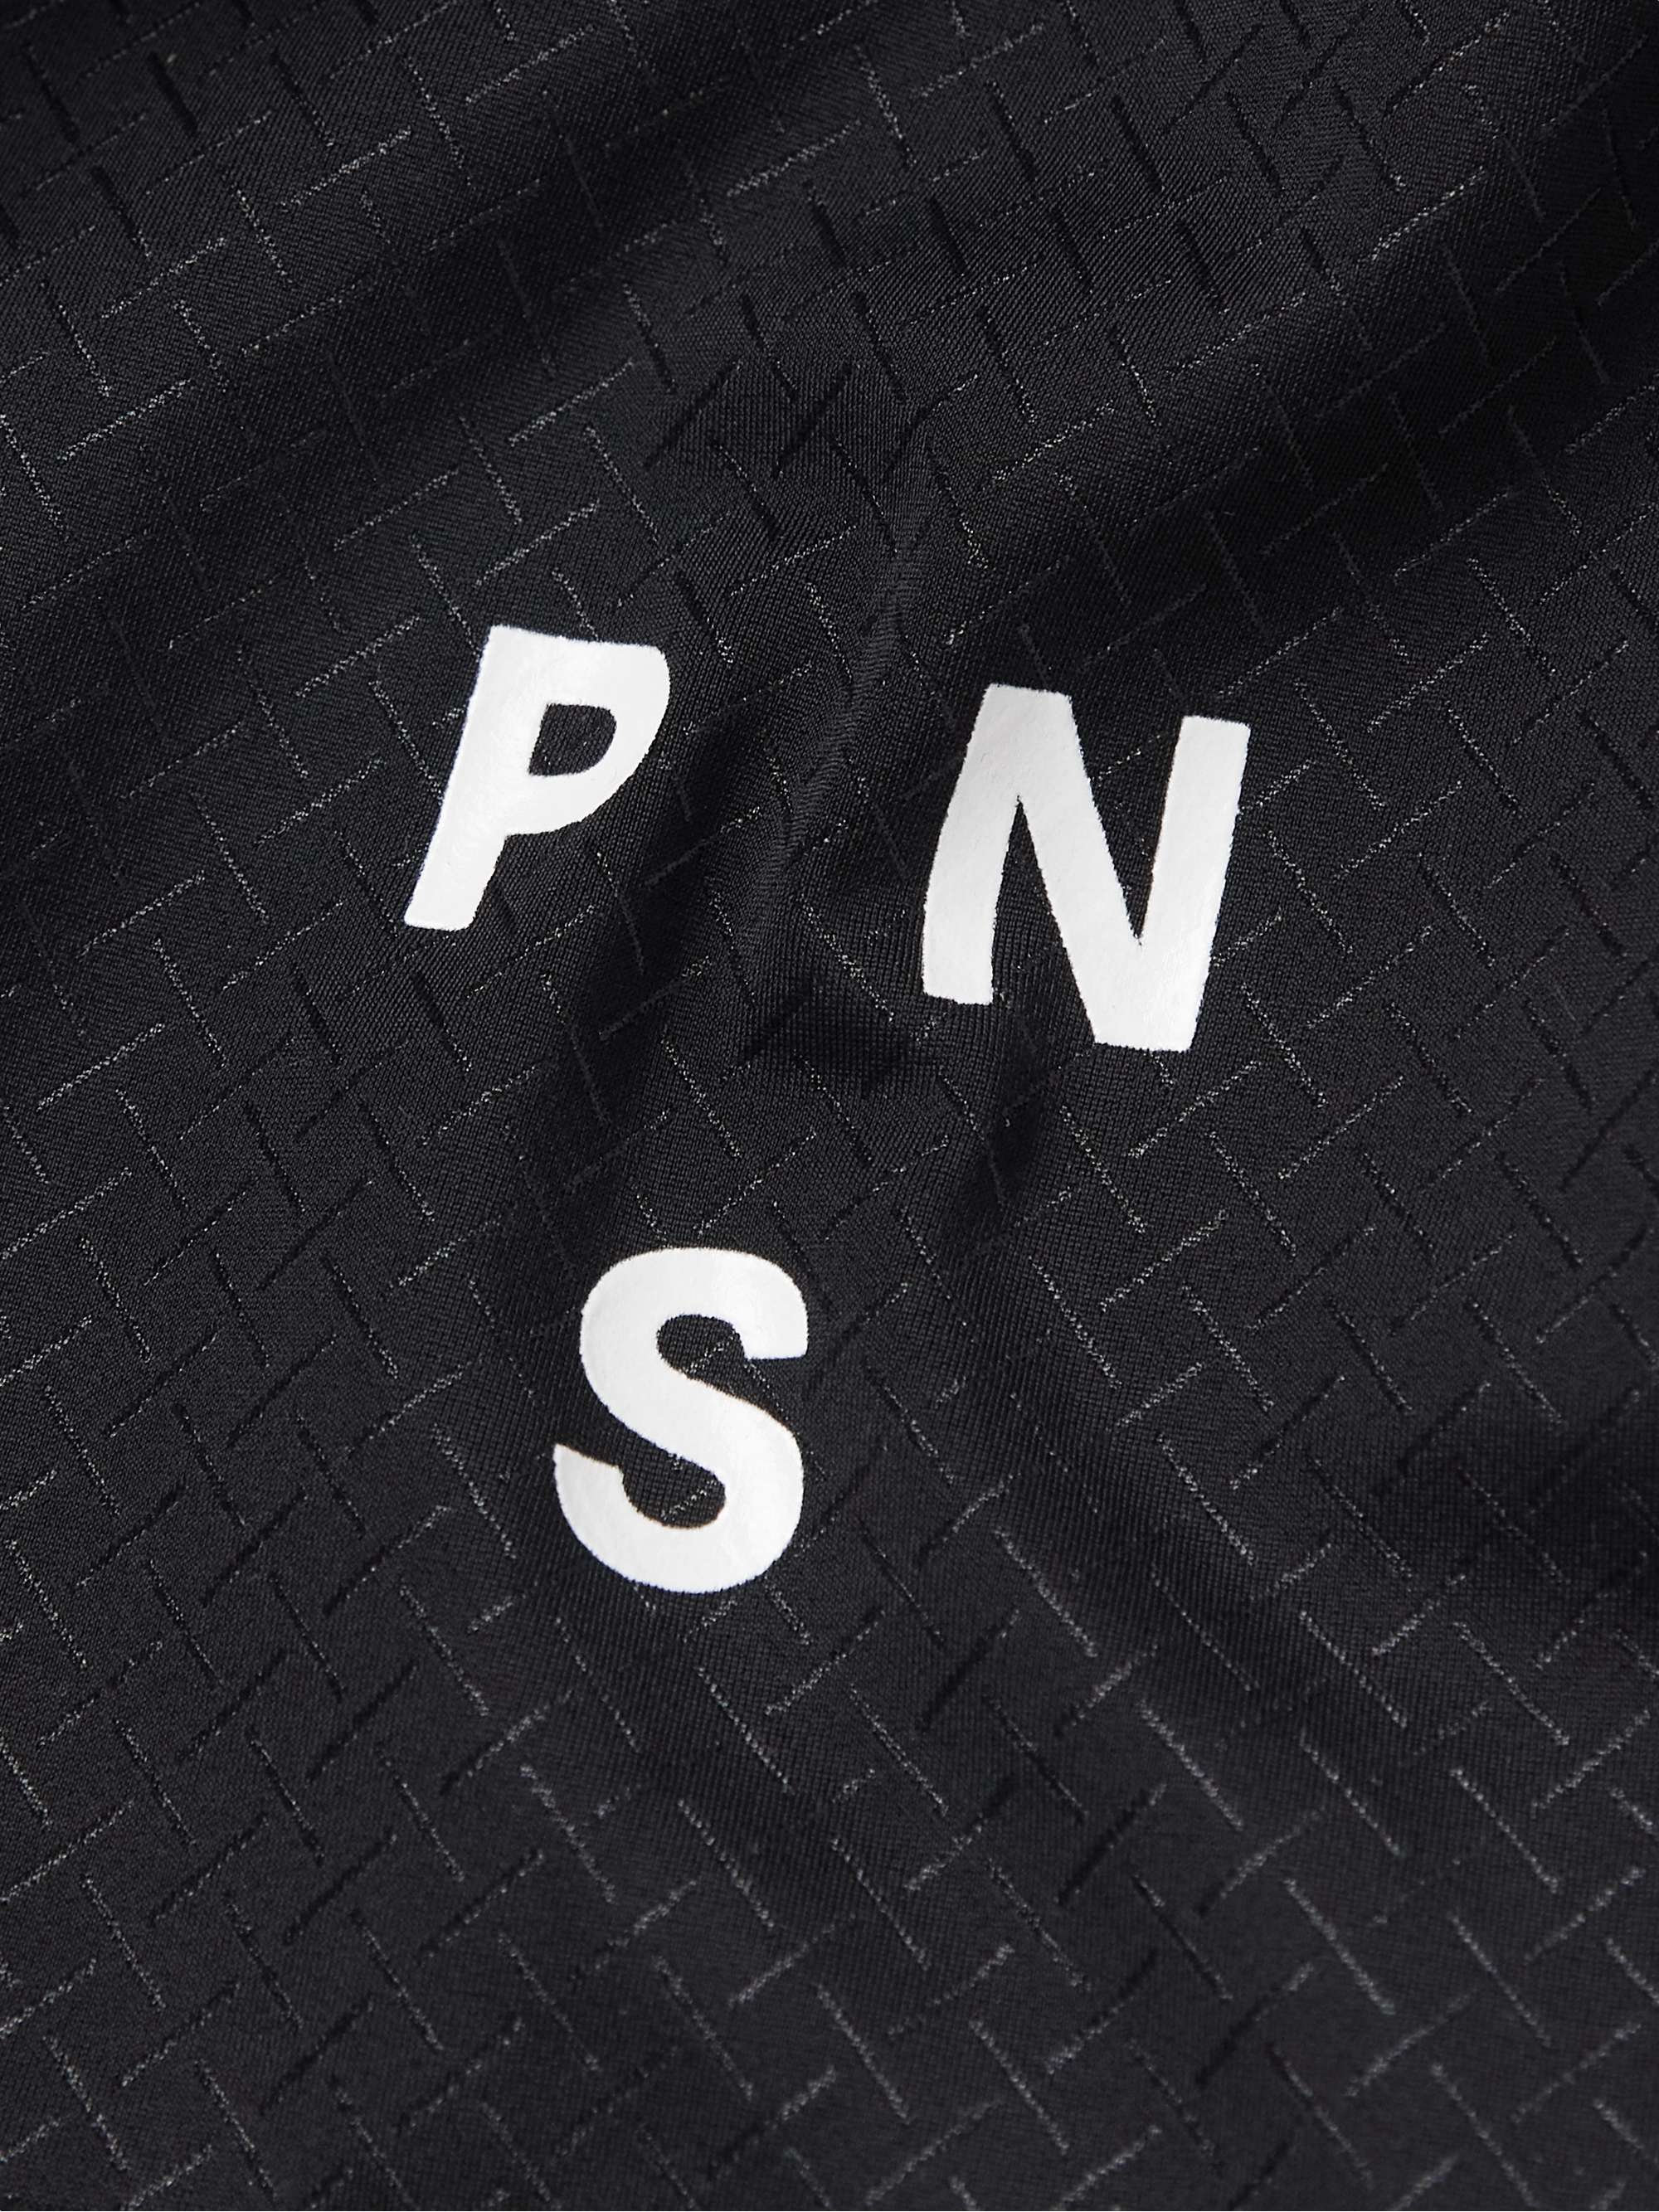 PAS NORMAL STUDIOS Mechanism Logo-Print Stretch-Jersey and Mesh Cycling Bib Shorts